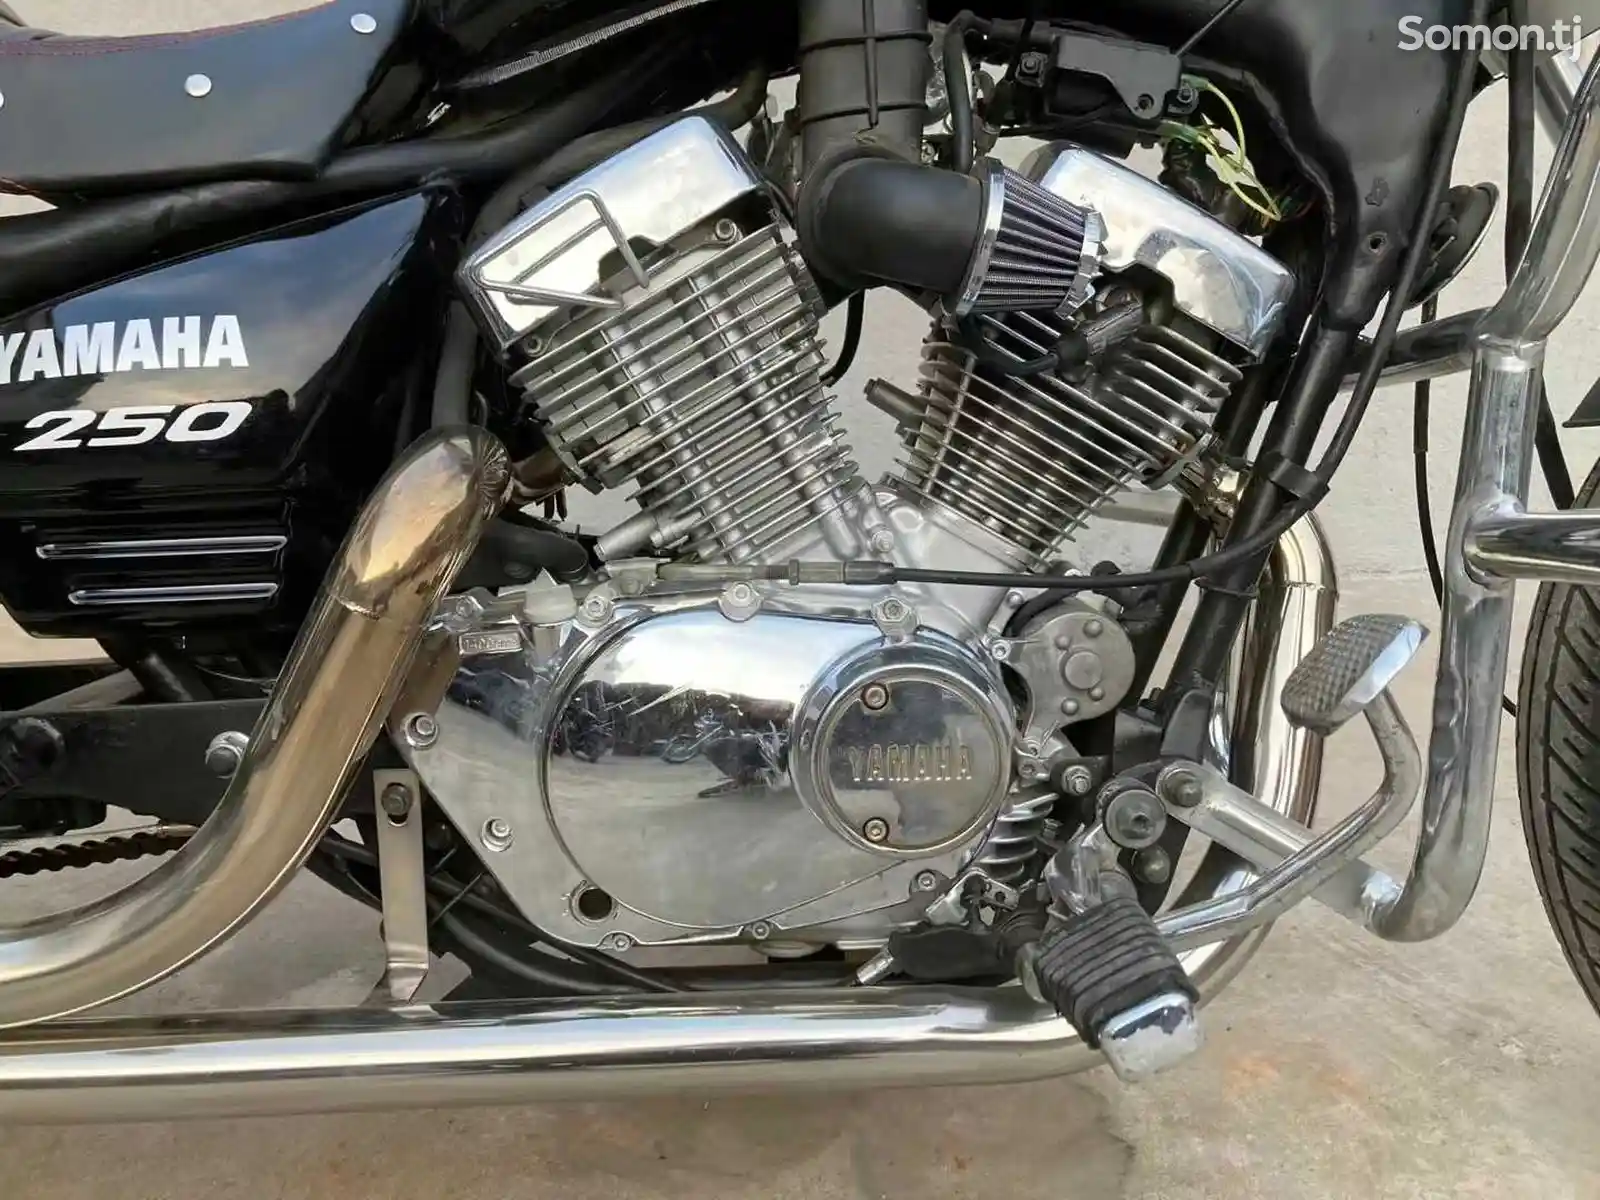 Мотоцикл Yamaha V-250cc на заказ-9